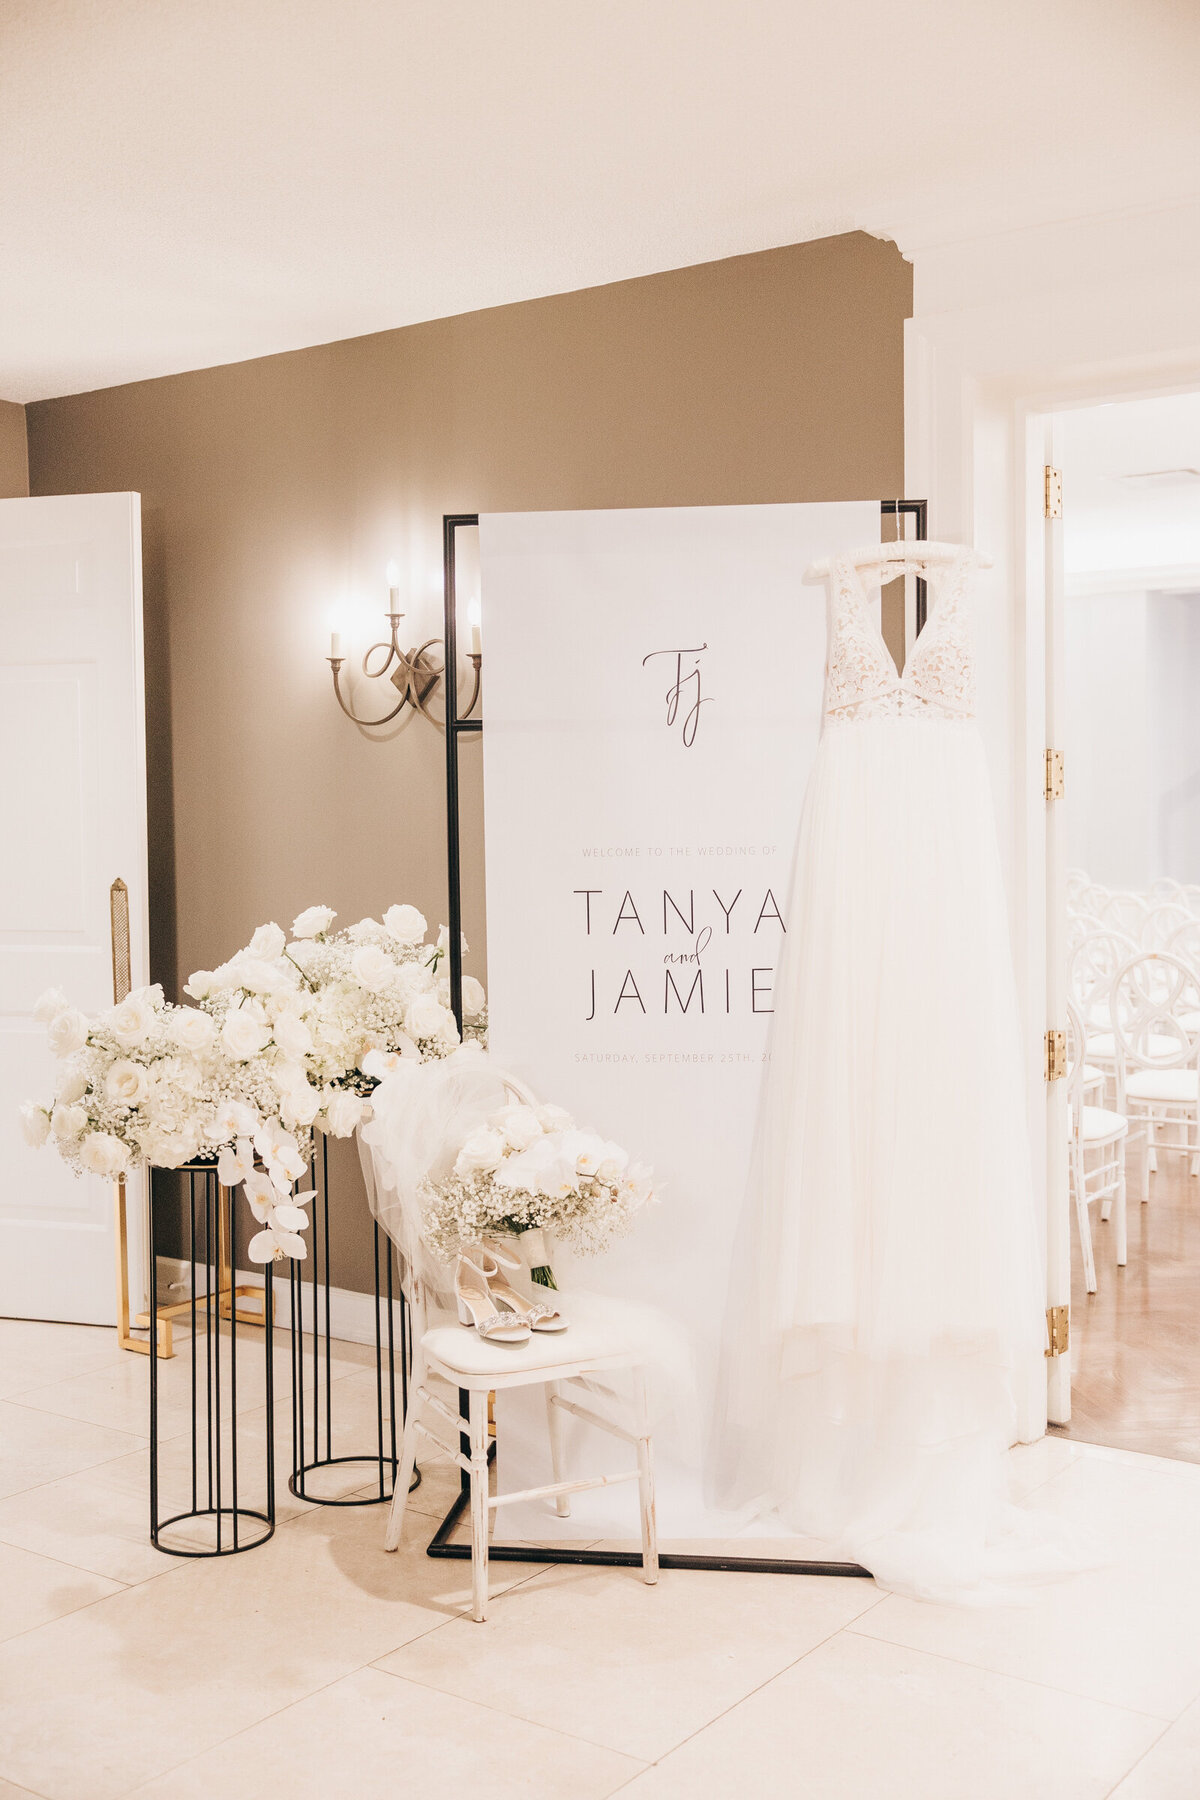 Wedding dress hanging on custom name sign at an indoor wedding